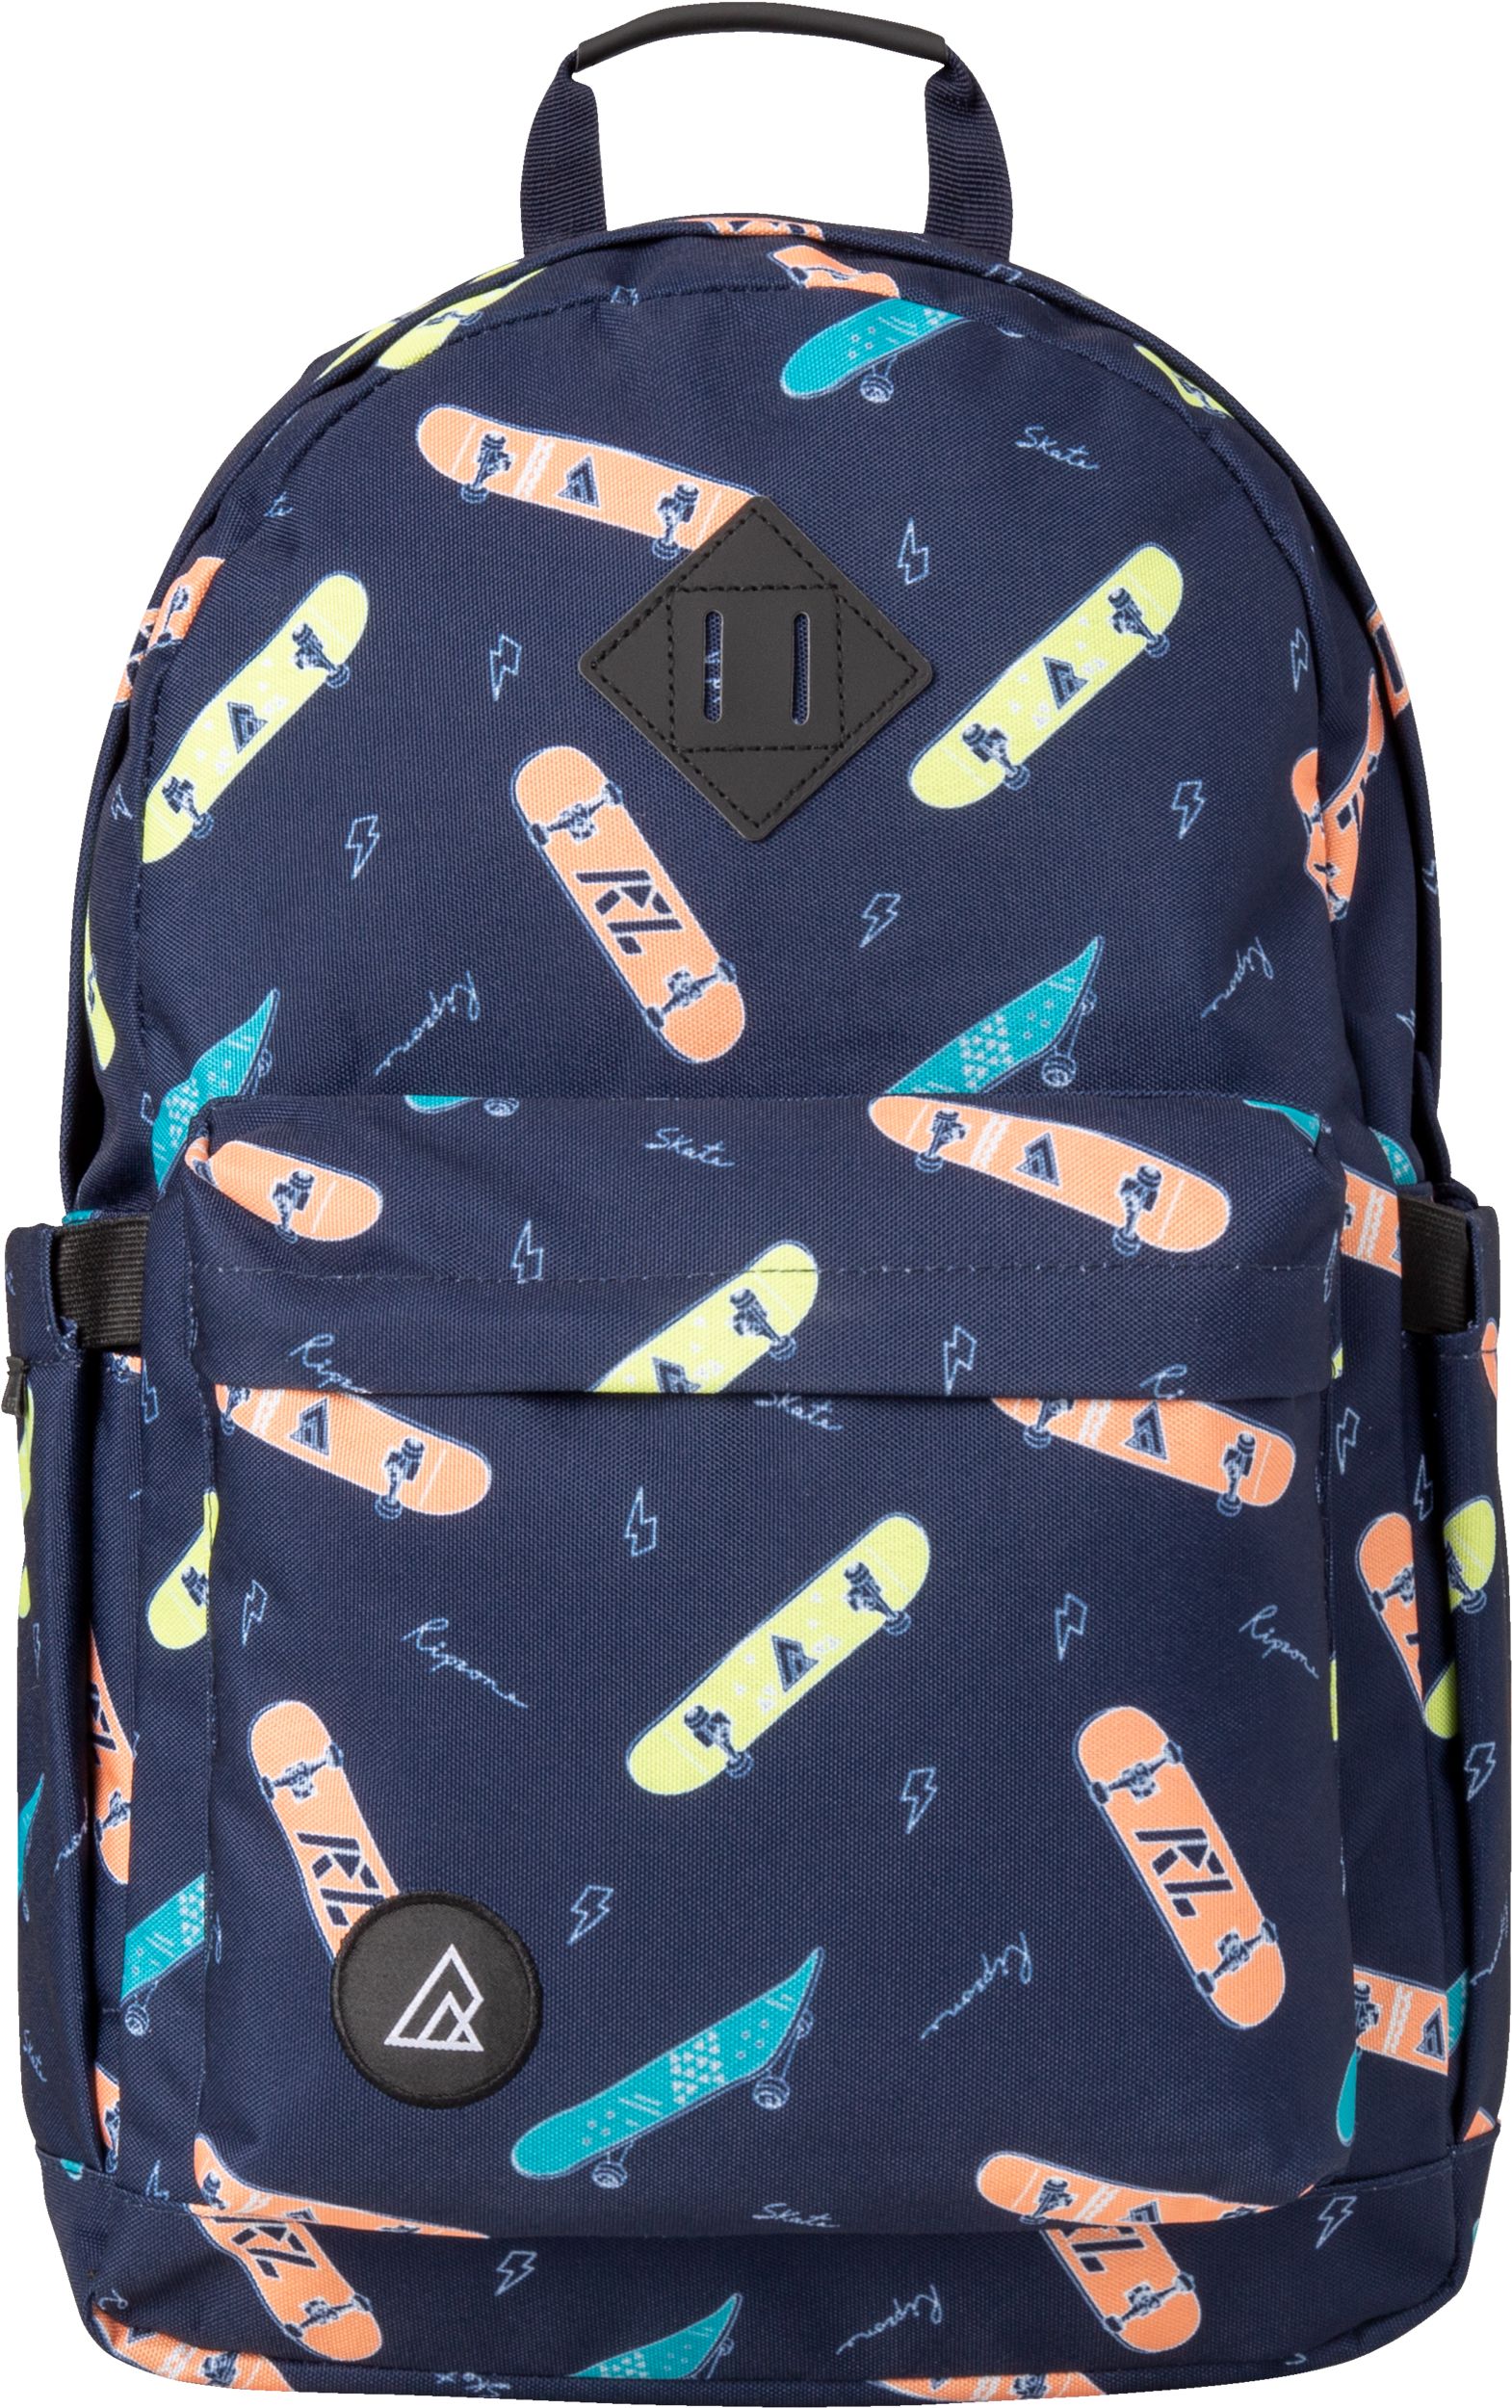 Ripzone Boys' Newton 15L Backpack